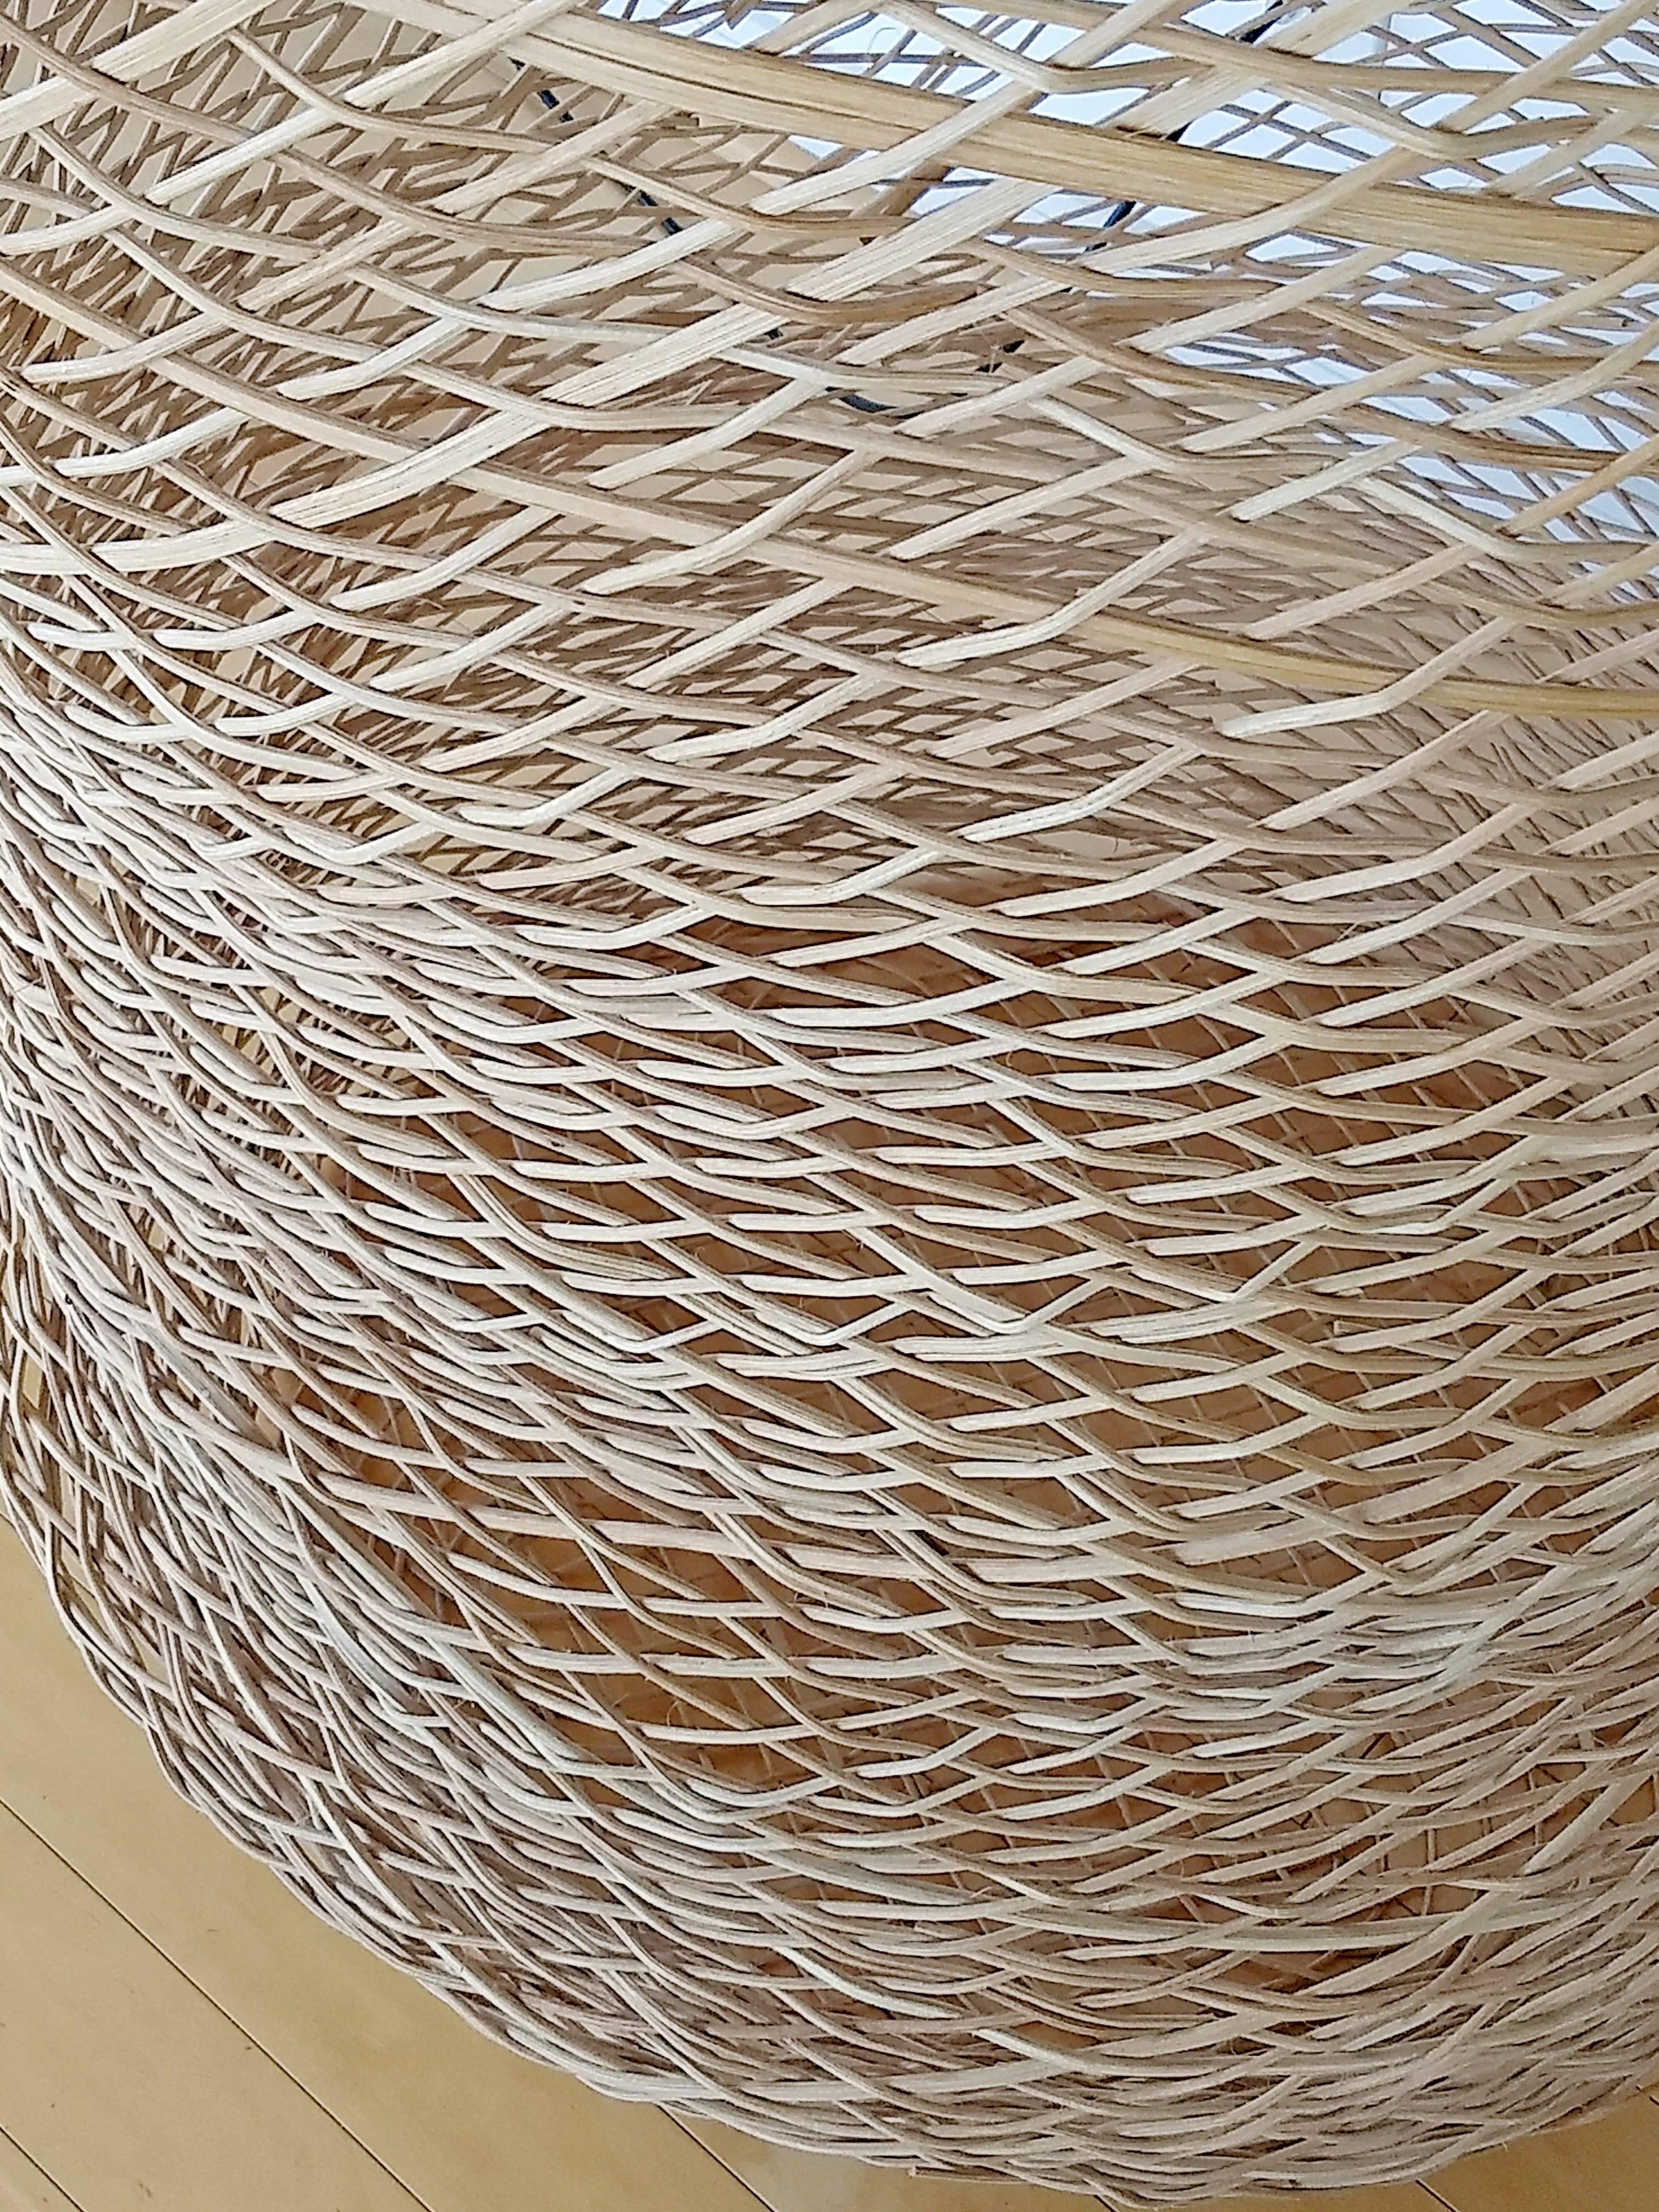 Wood Linda Kelly Contemporary Woven Basket Standing Floor Art Sculpture